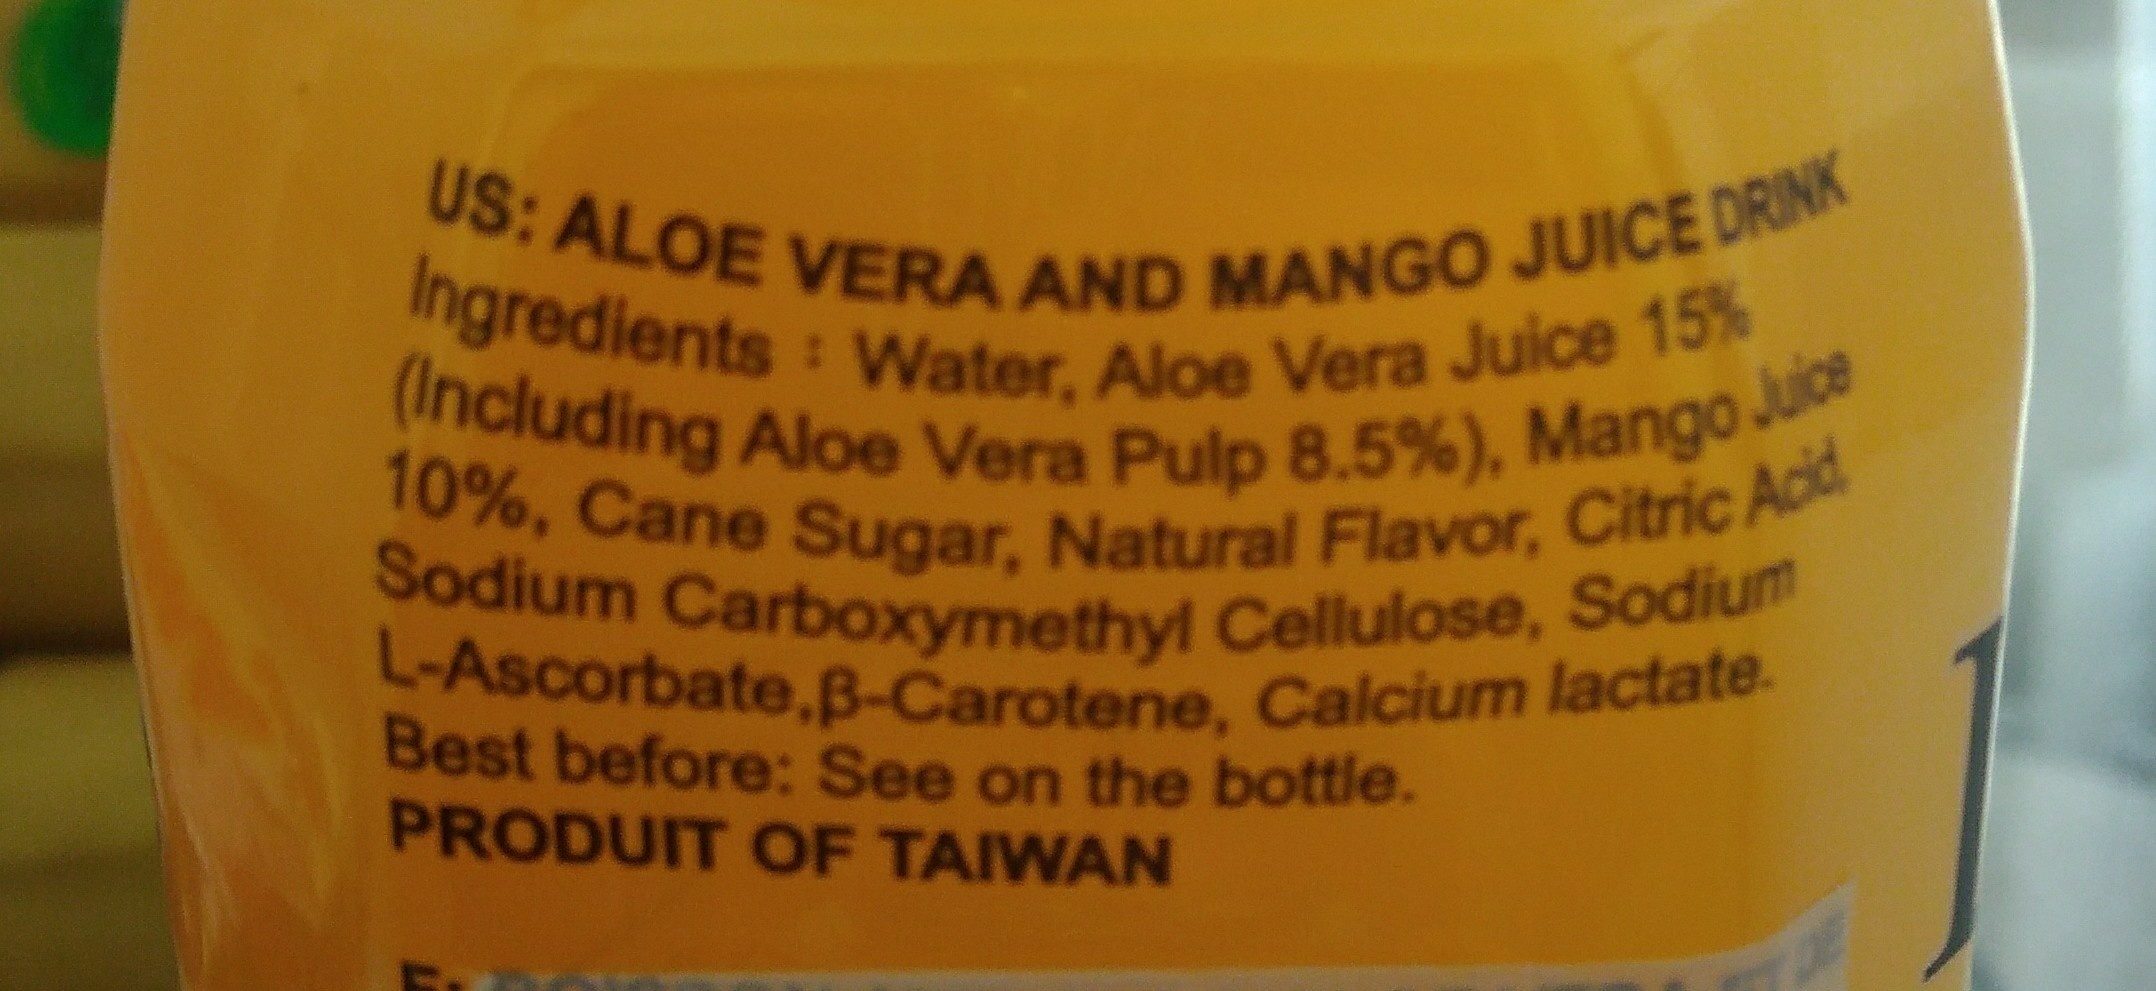 Chin Chin Aloe Vera Mango Juice - Ingredients - fr